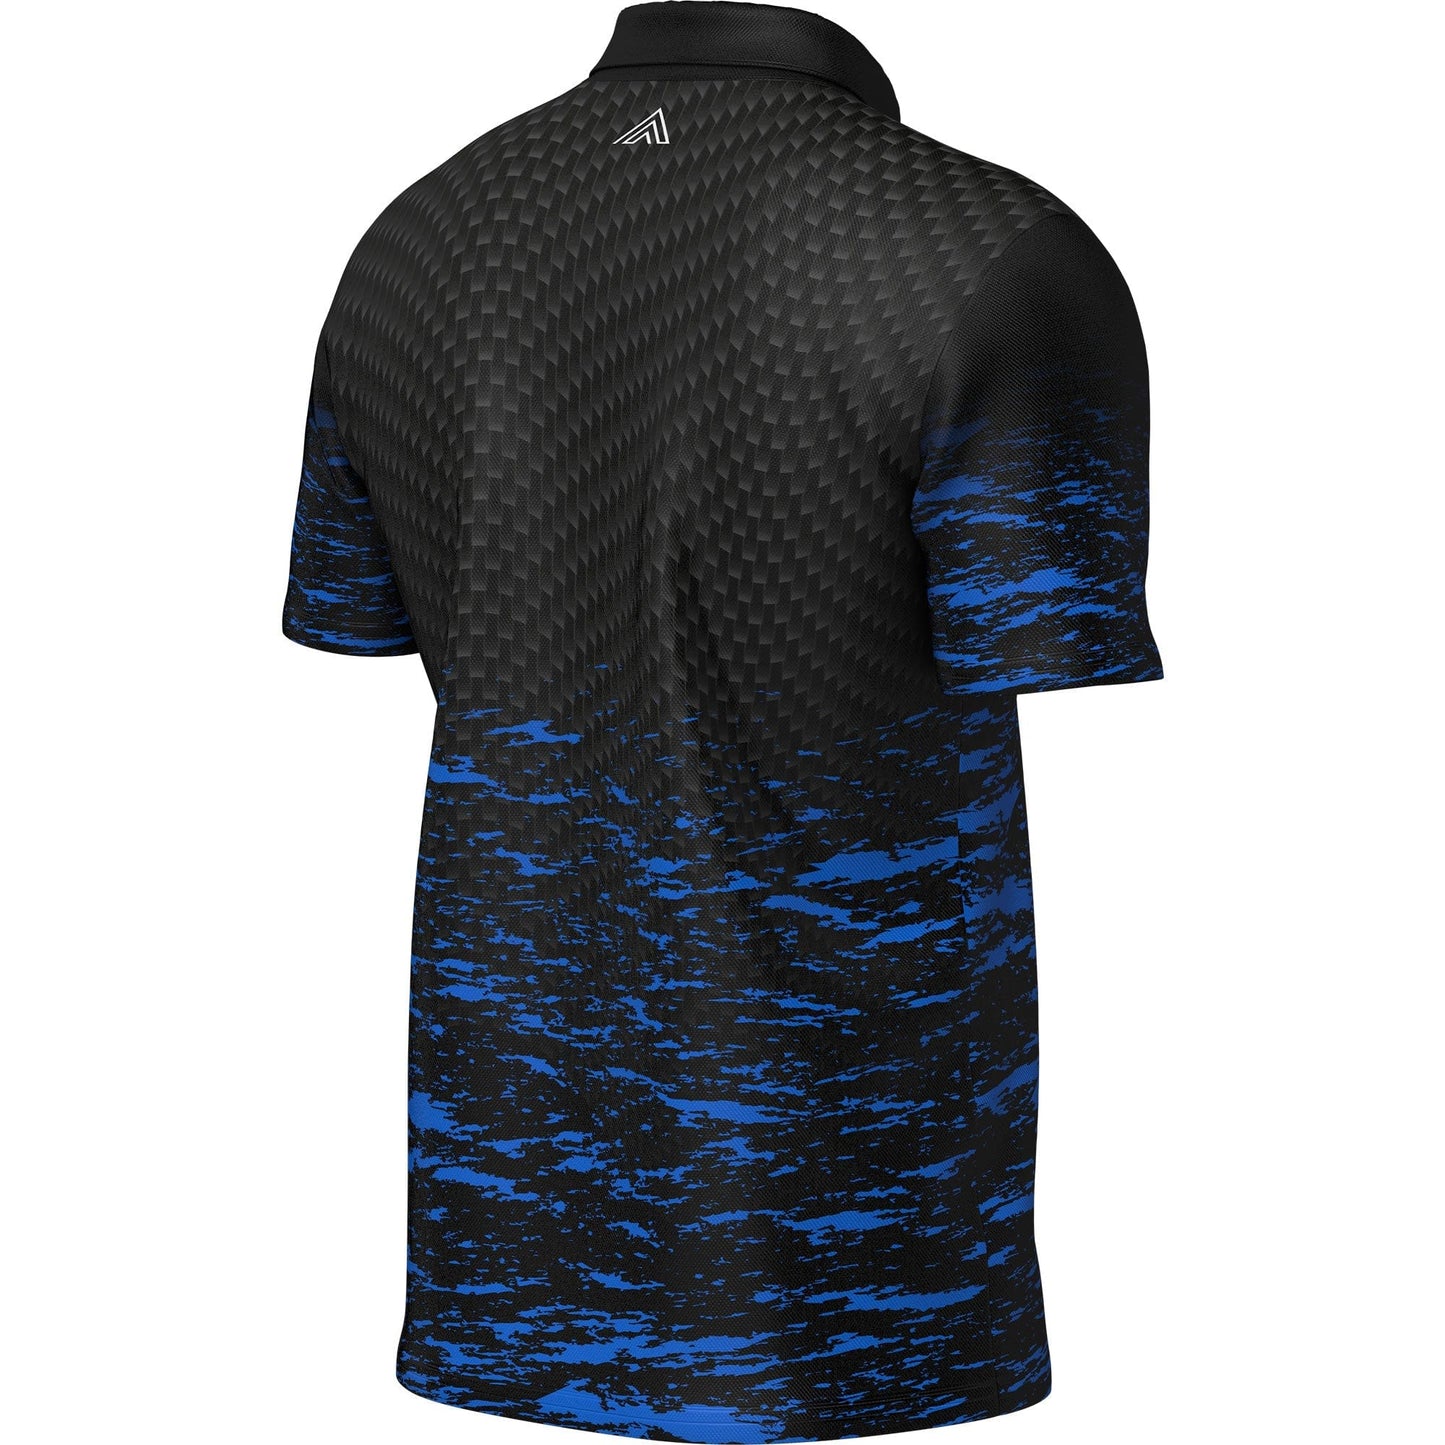 Arraz Lava Dart Shirt - with Pocket - Black & Blue